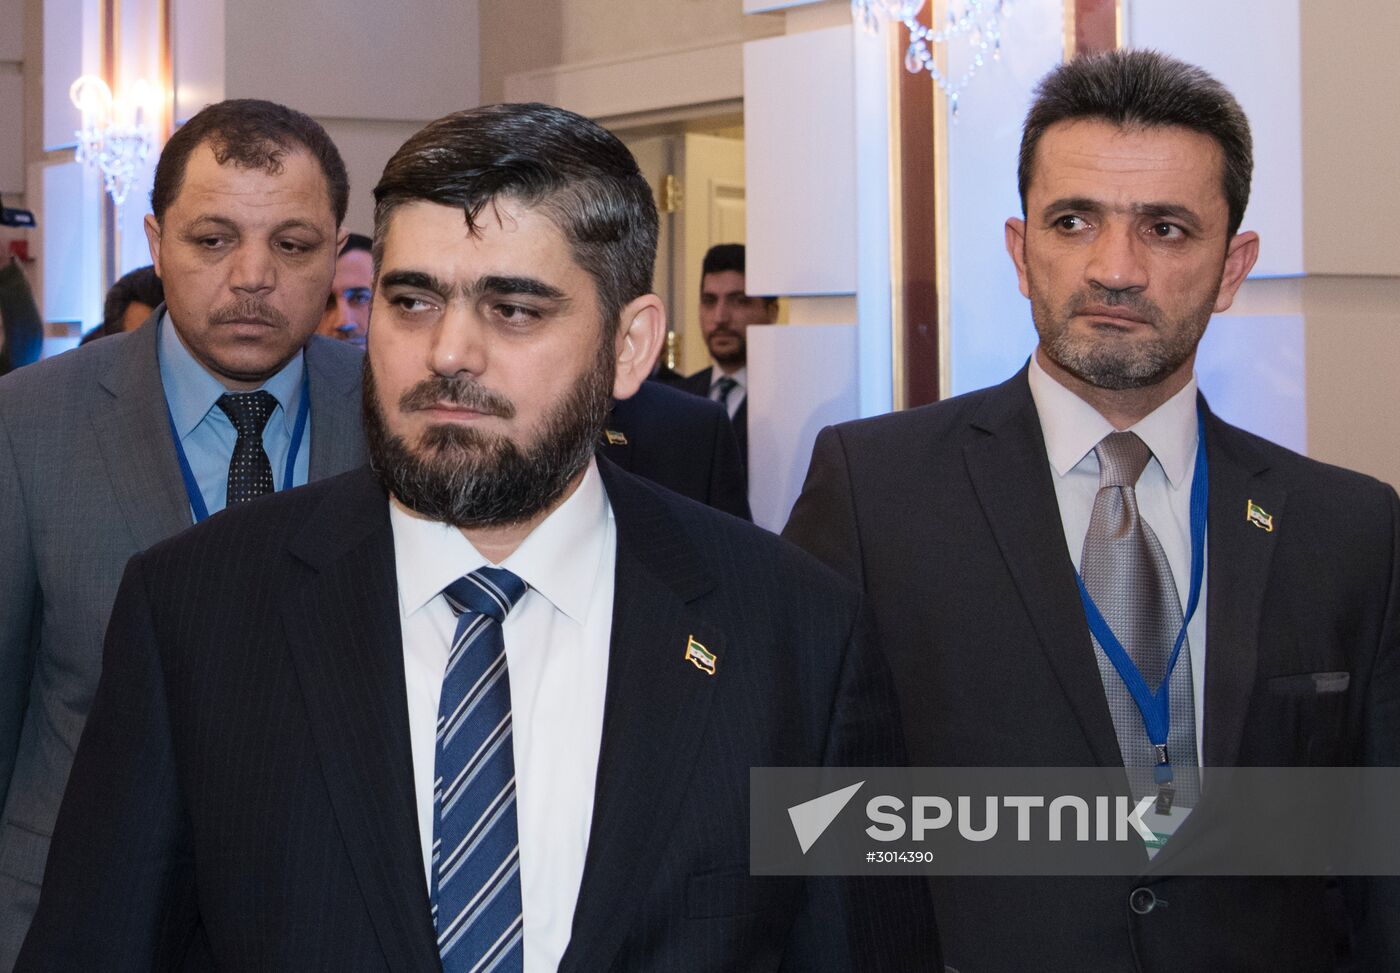 Syria talks in Astana